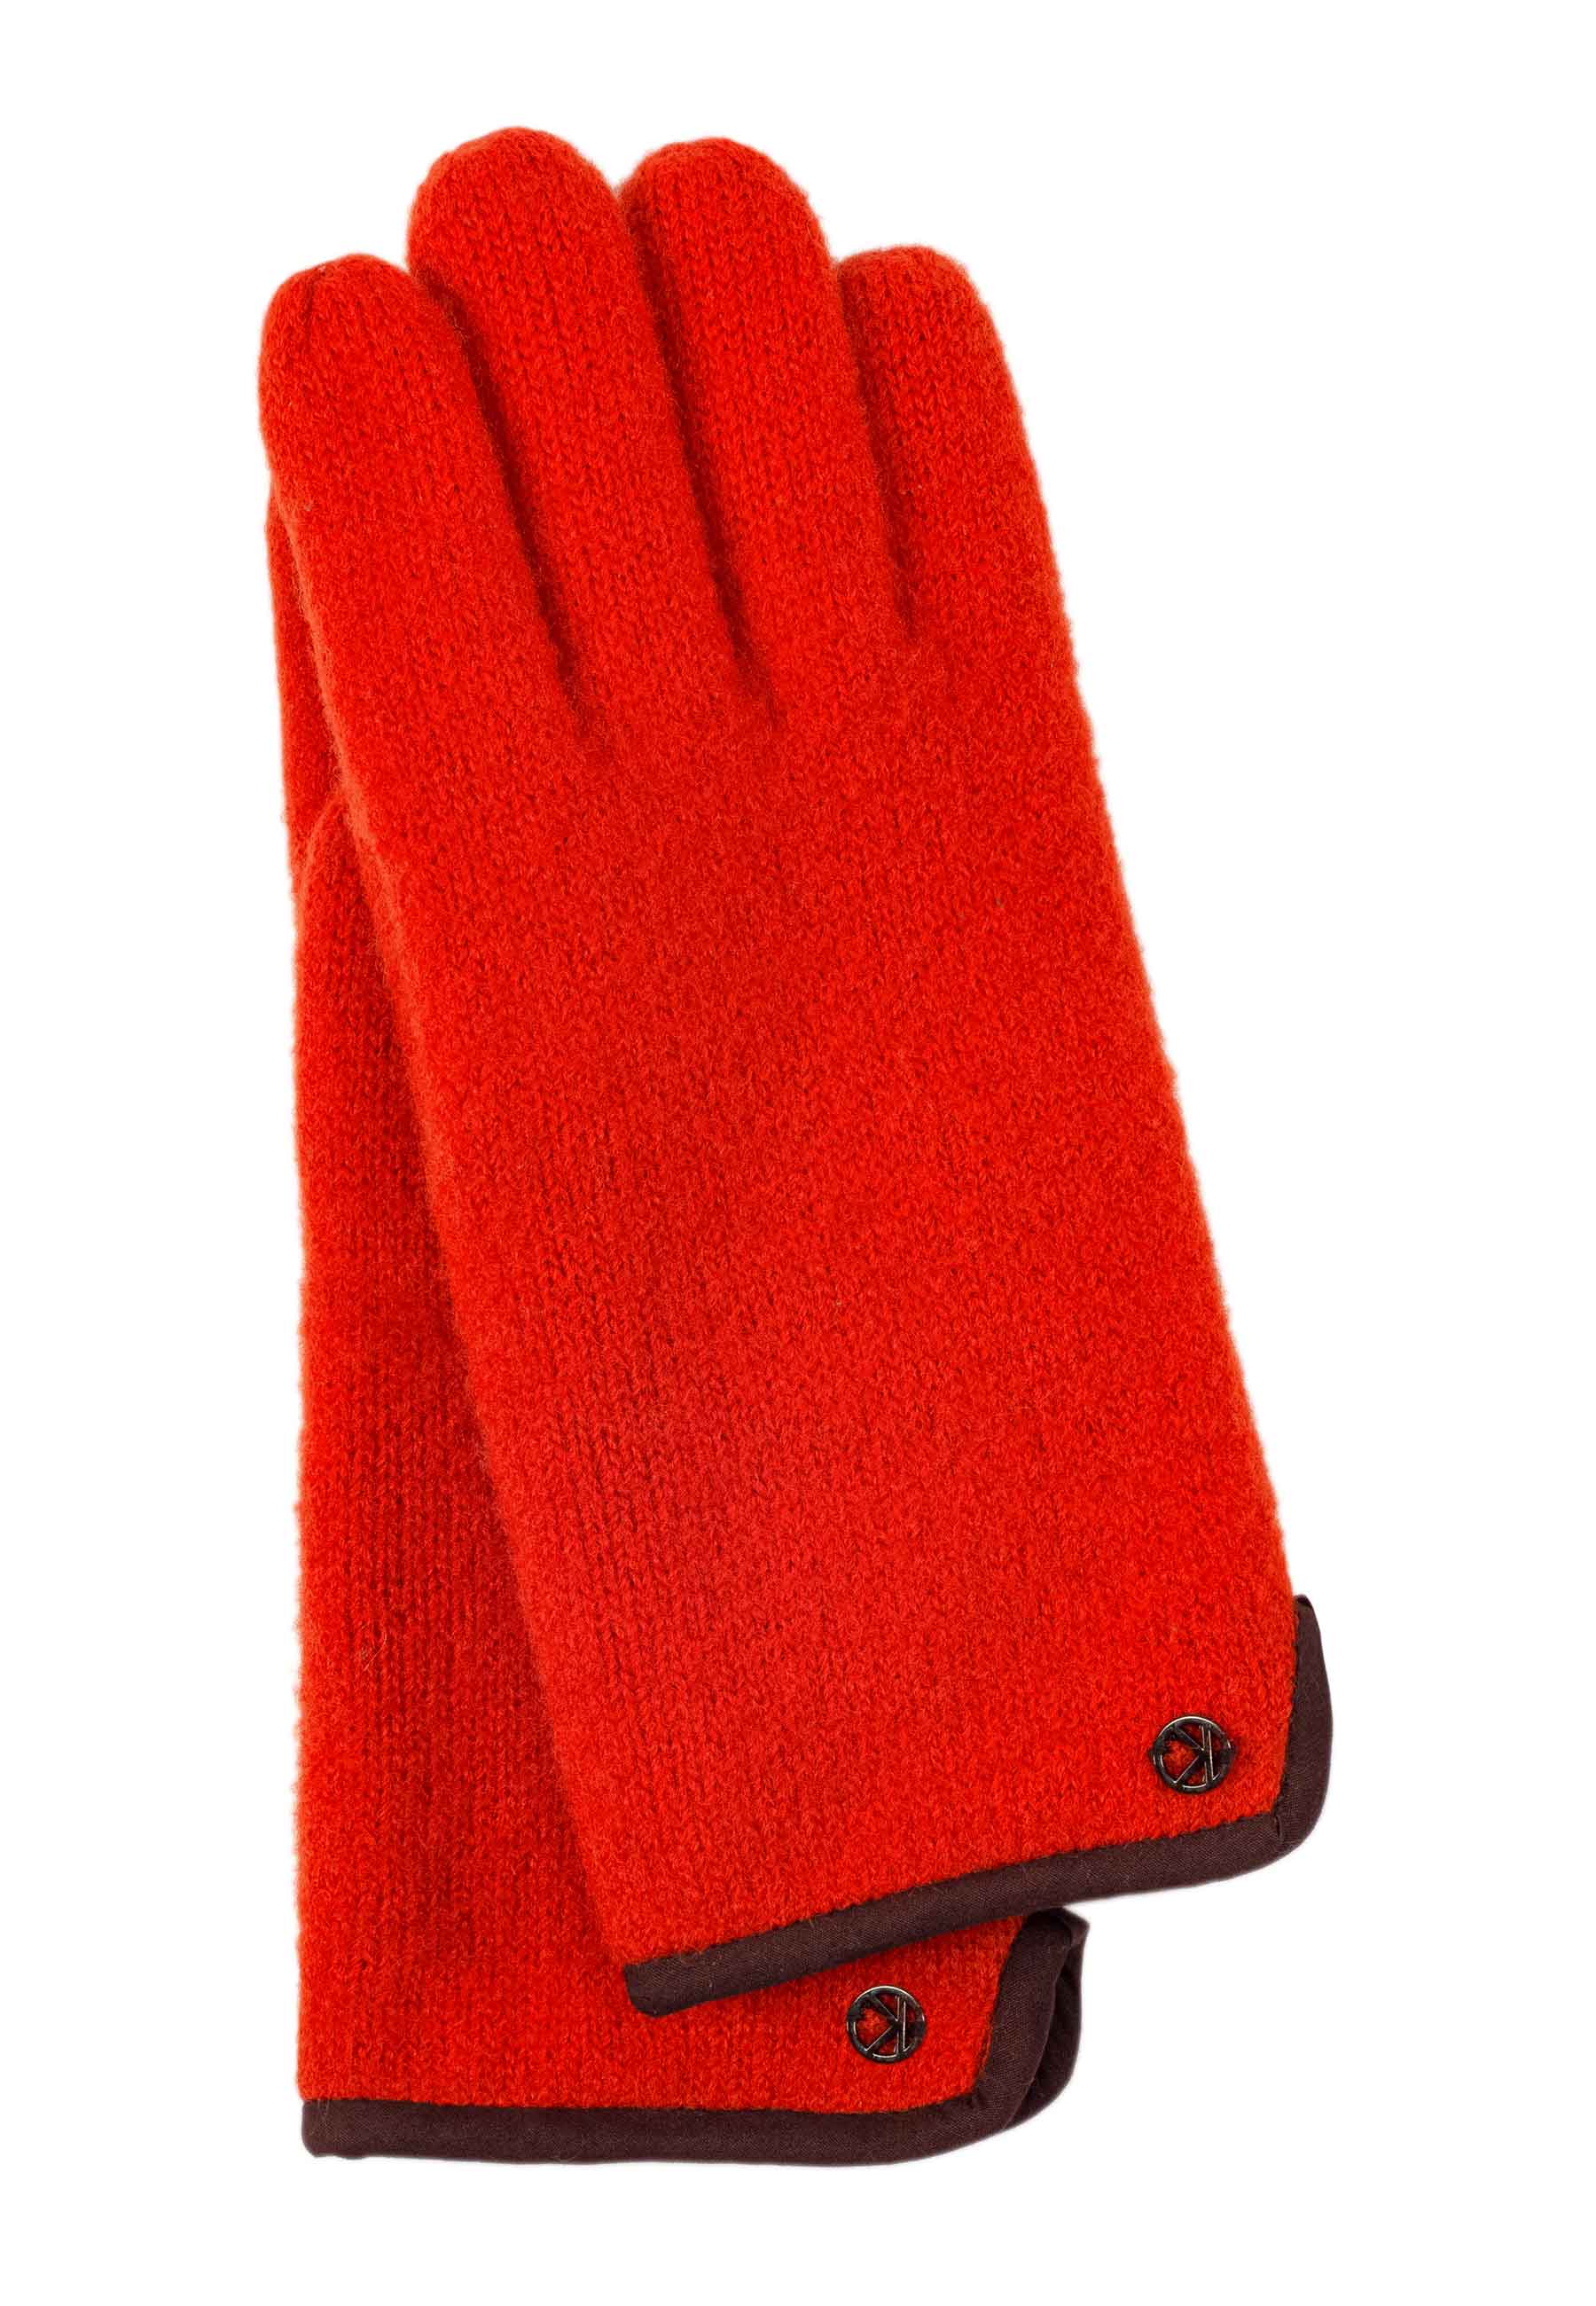 KESSLER Sasha - red - 6,5 - Damen Walkstrickhandschuh 